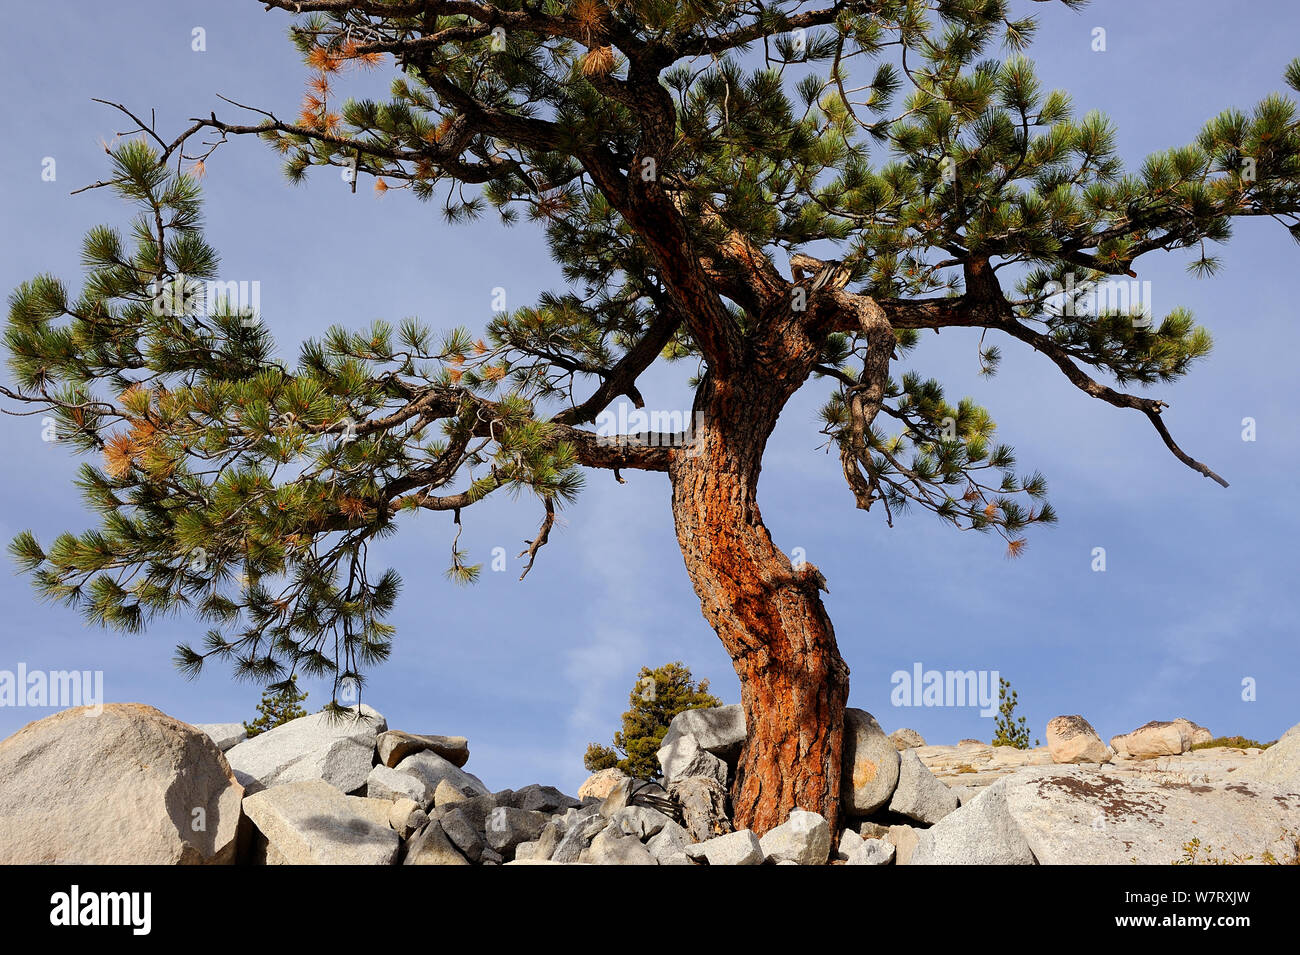 Jeffrey pine tree (Pinus jeffreyi) growing in granite, Yosemite National Park, California, USA, October 2012. Stock Photo